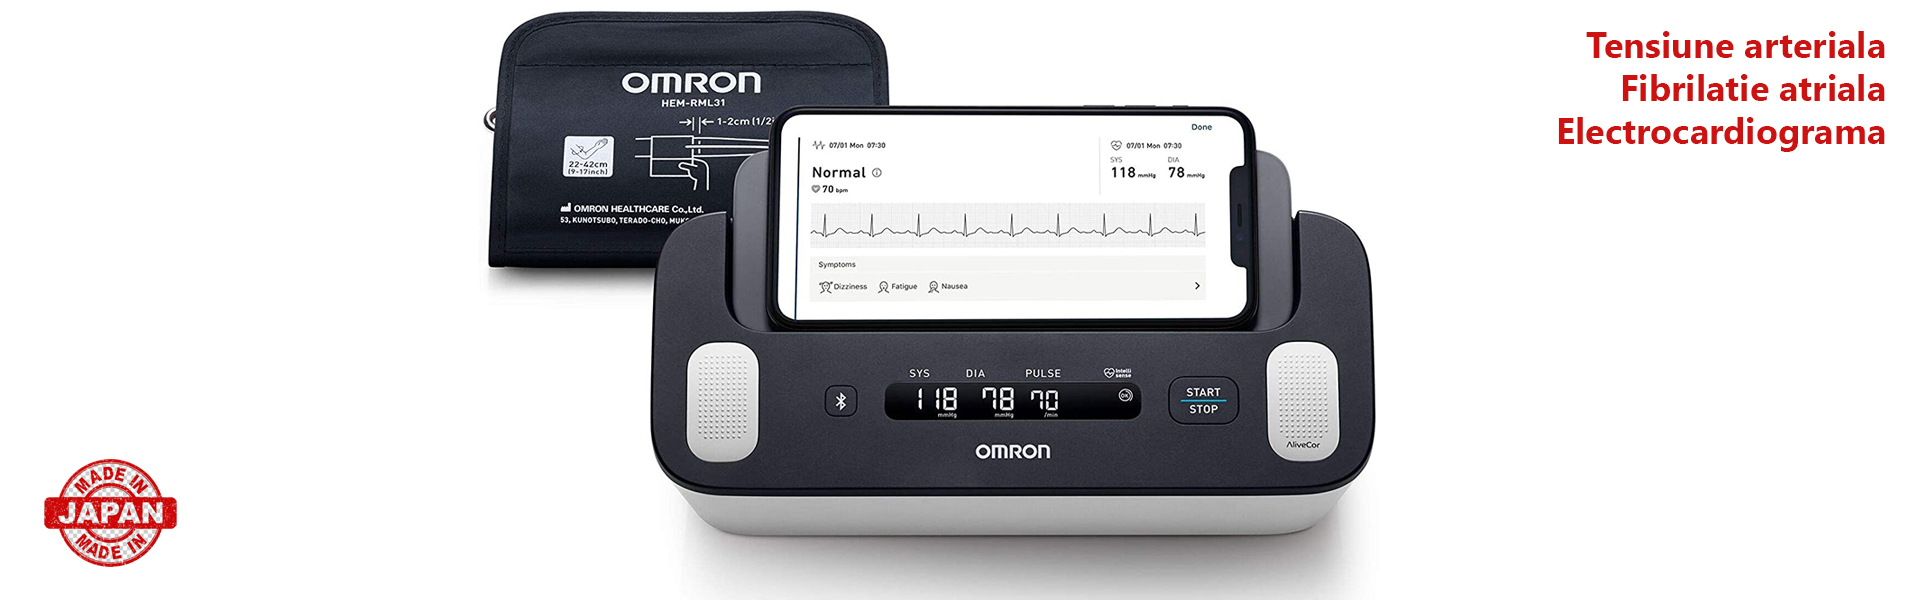 Omron Complete - Tensiometru automat pentru brat + ECG, validat clinic, functie AFIB, fabricat in Japonia